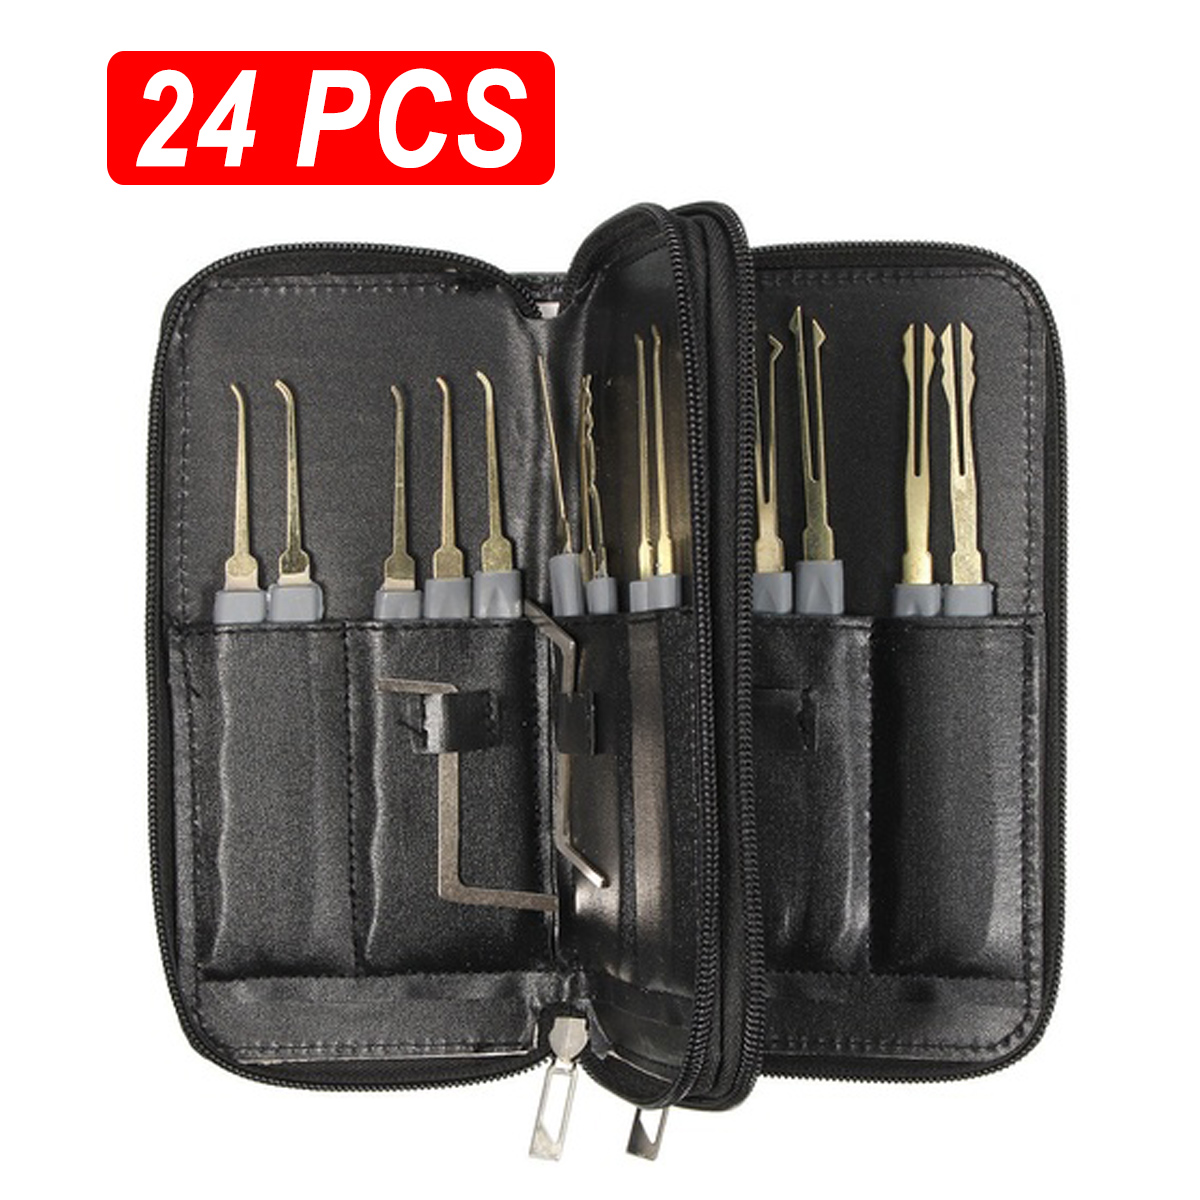 Padlock-Pick-Set-For-Locksmith-Training-38241715115pcs-Lock-Pick-Practice-Tools-Hooks-Set-1816061-6